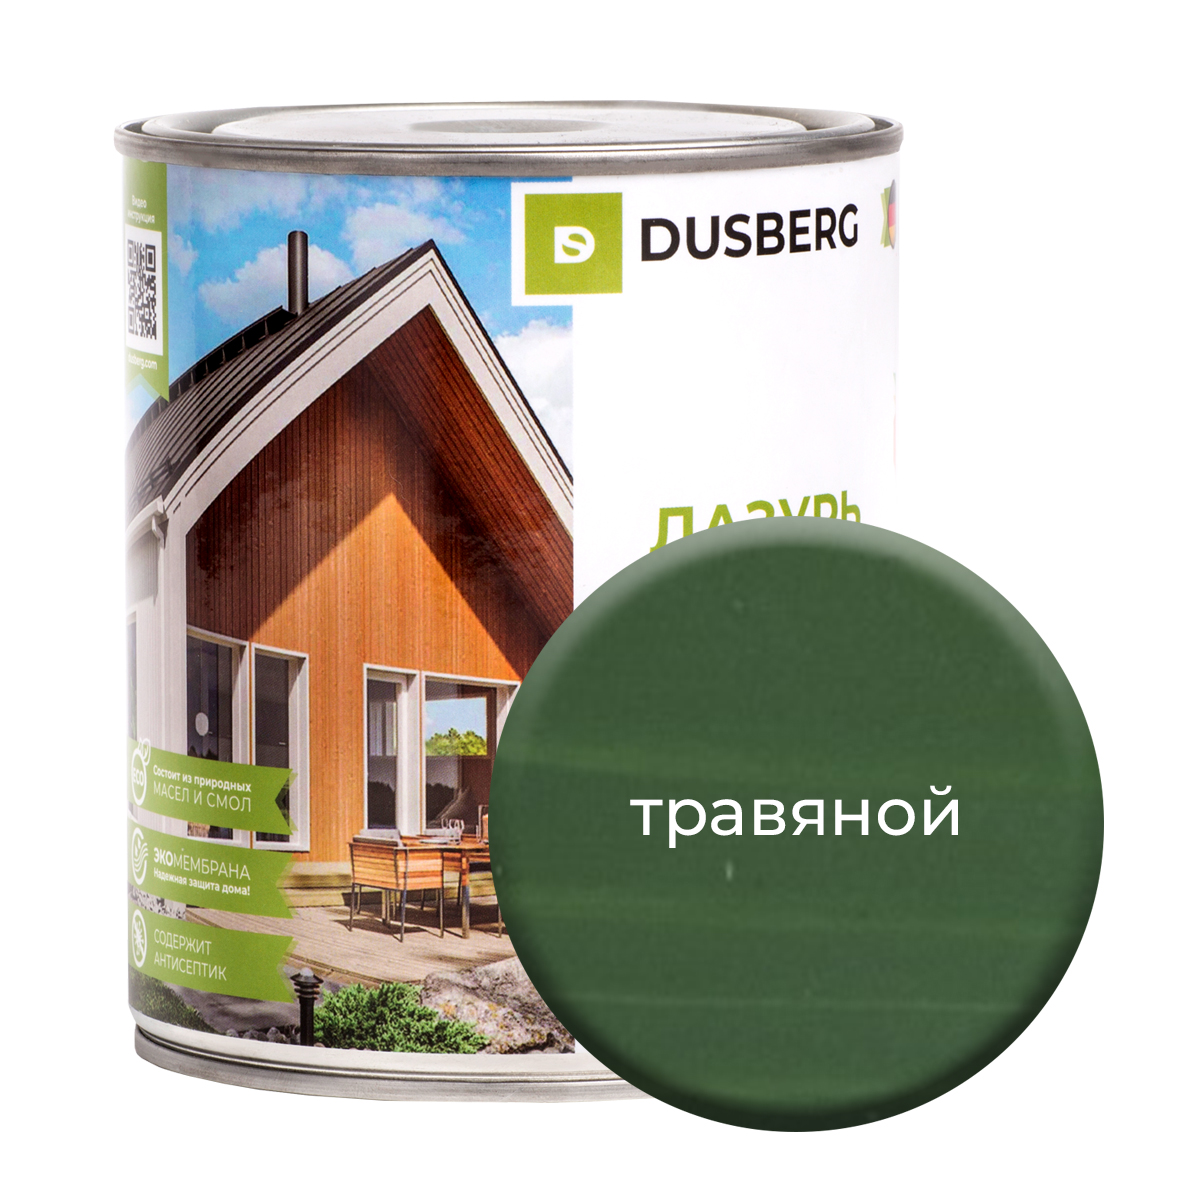 Лазурь Dusberg для дерева 750 мл Травяной чай травяной biopractika сила духа 40 гр